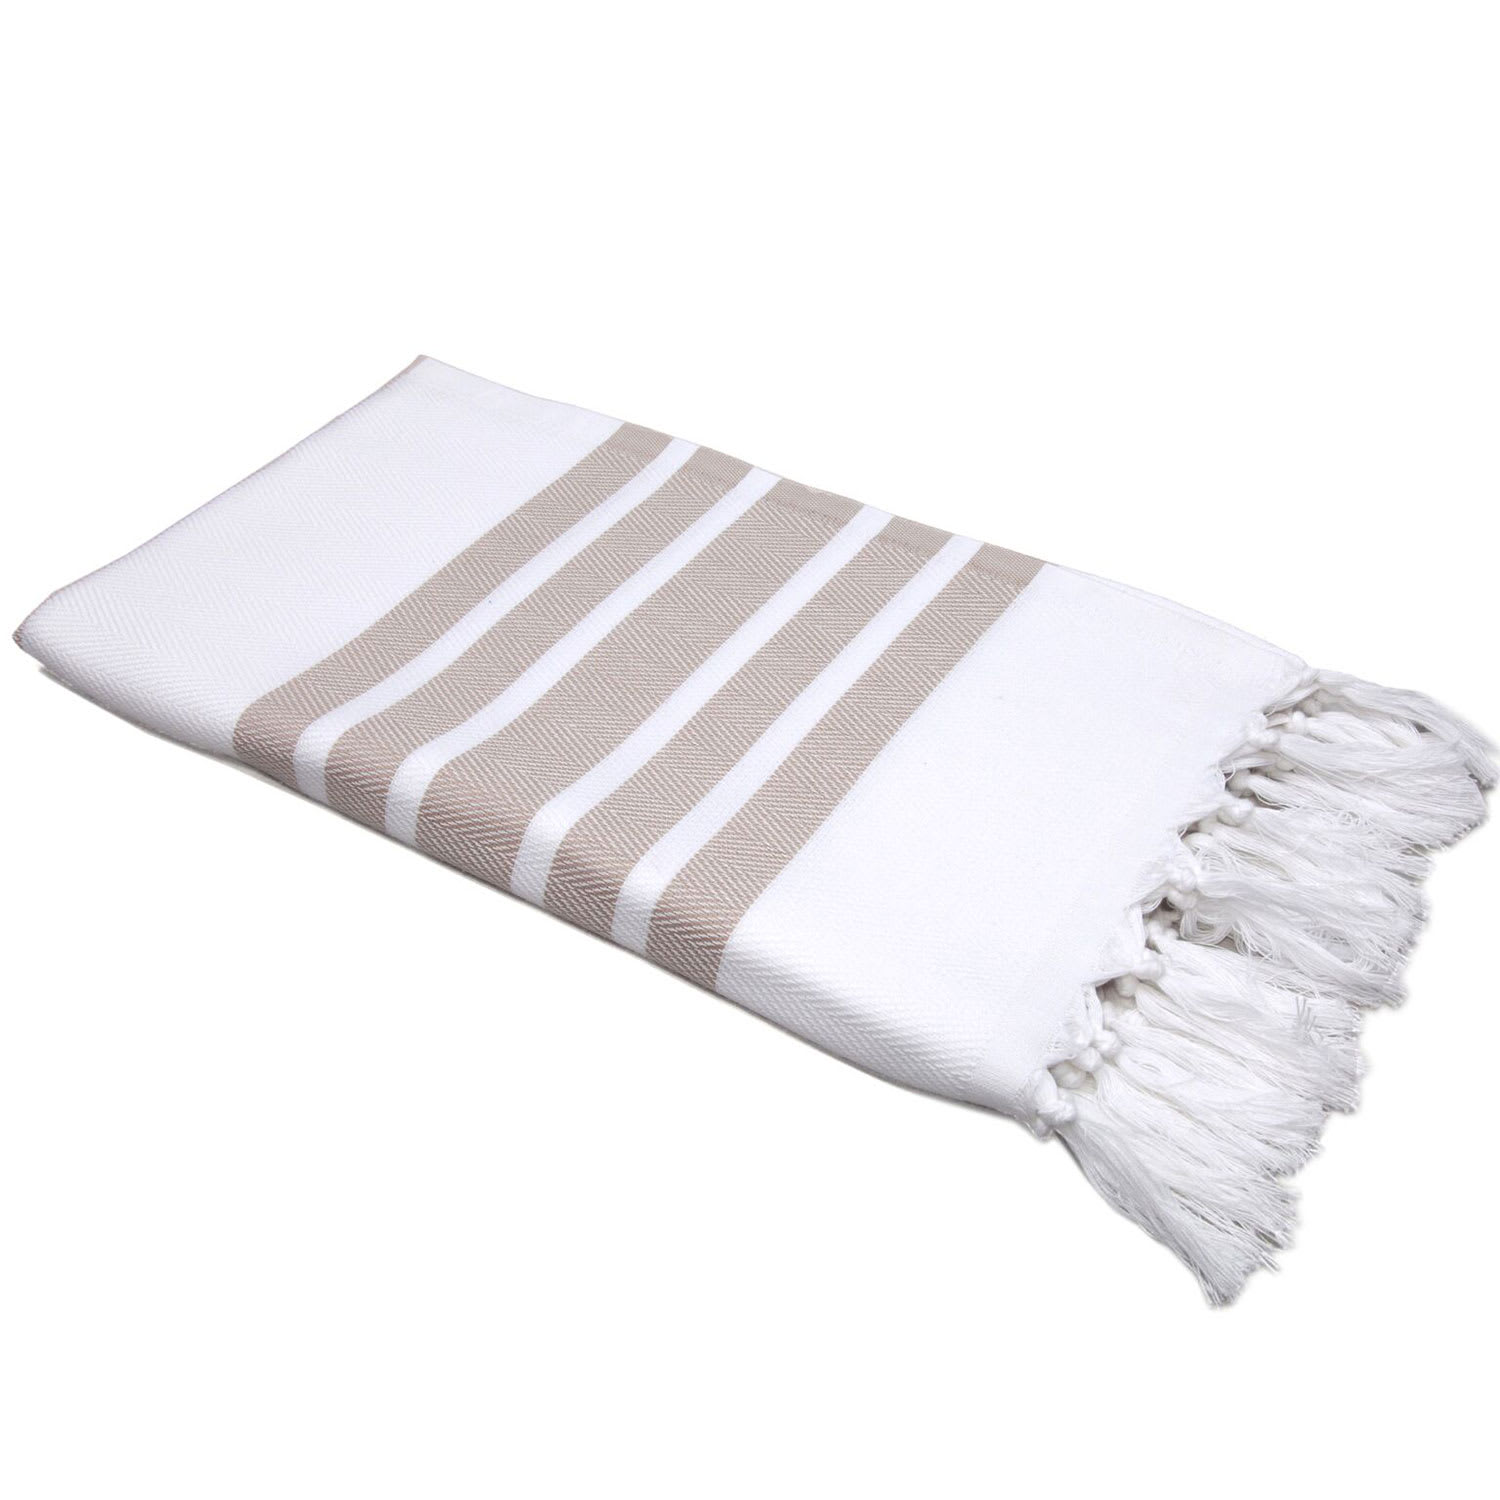 Santorini Turkish Cotton Towel - Beige